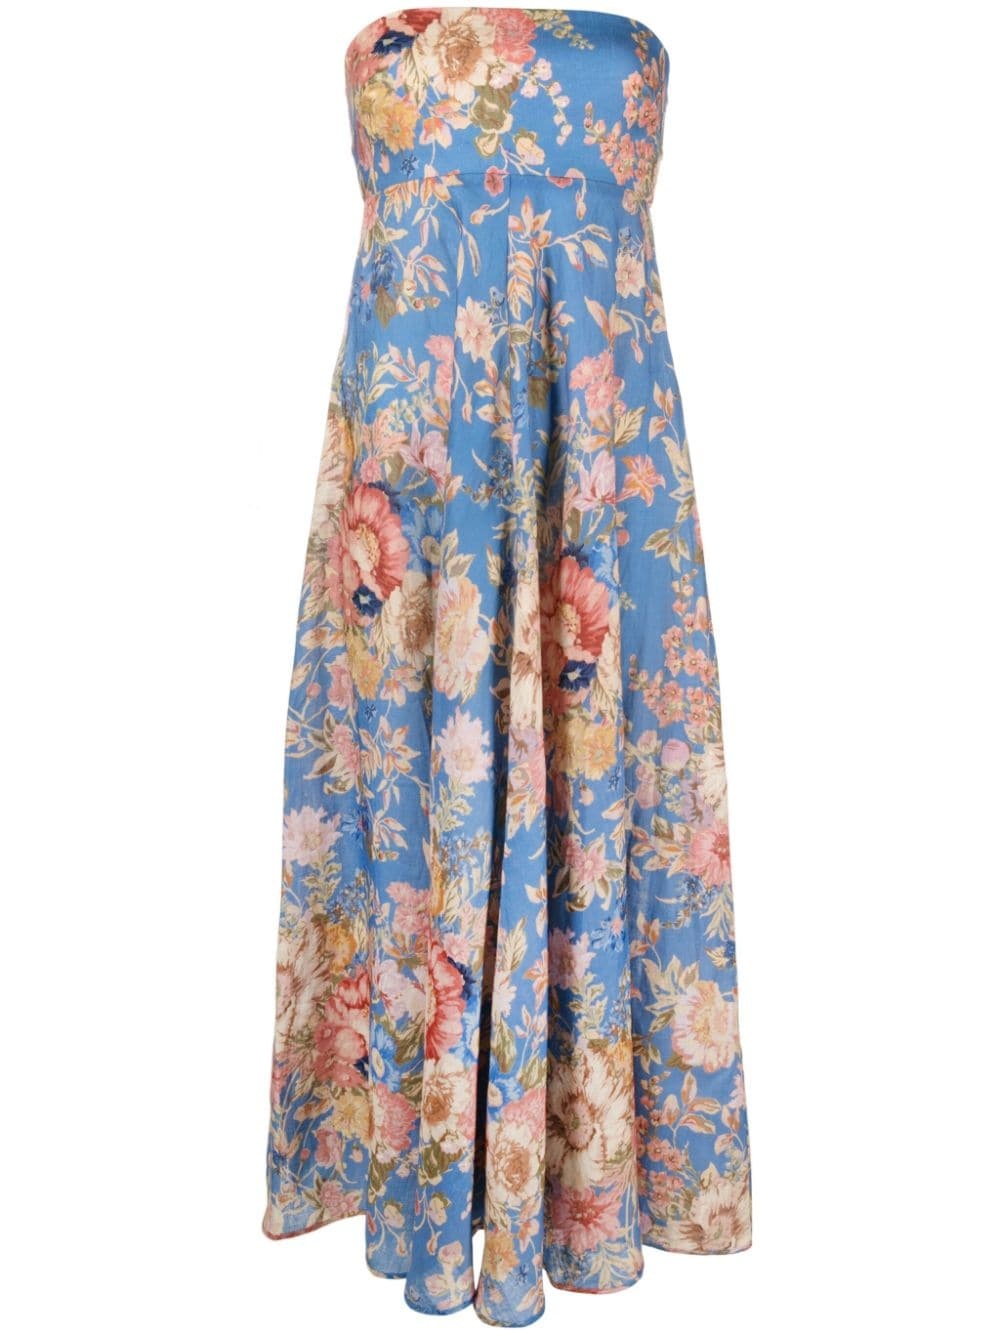 August floral-print strapless dress - 1